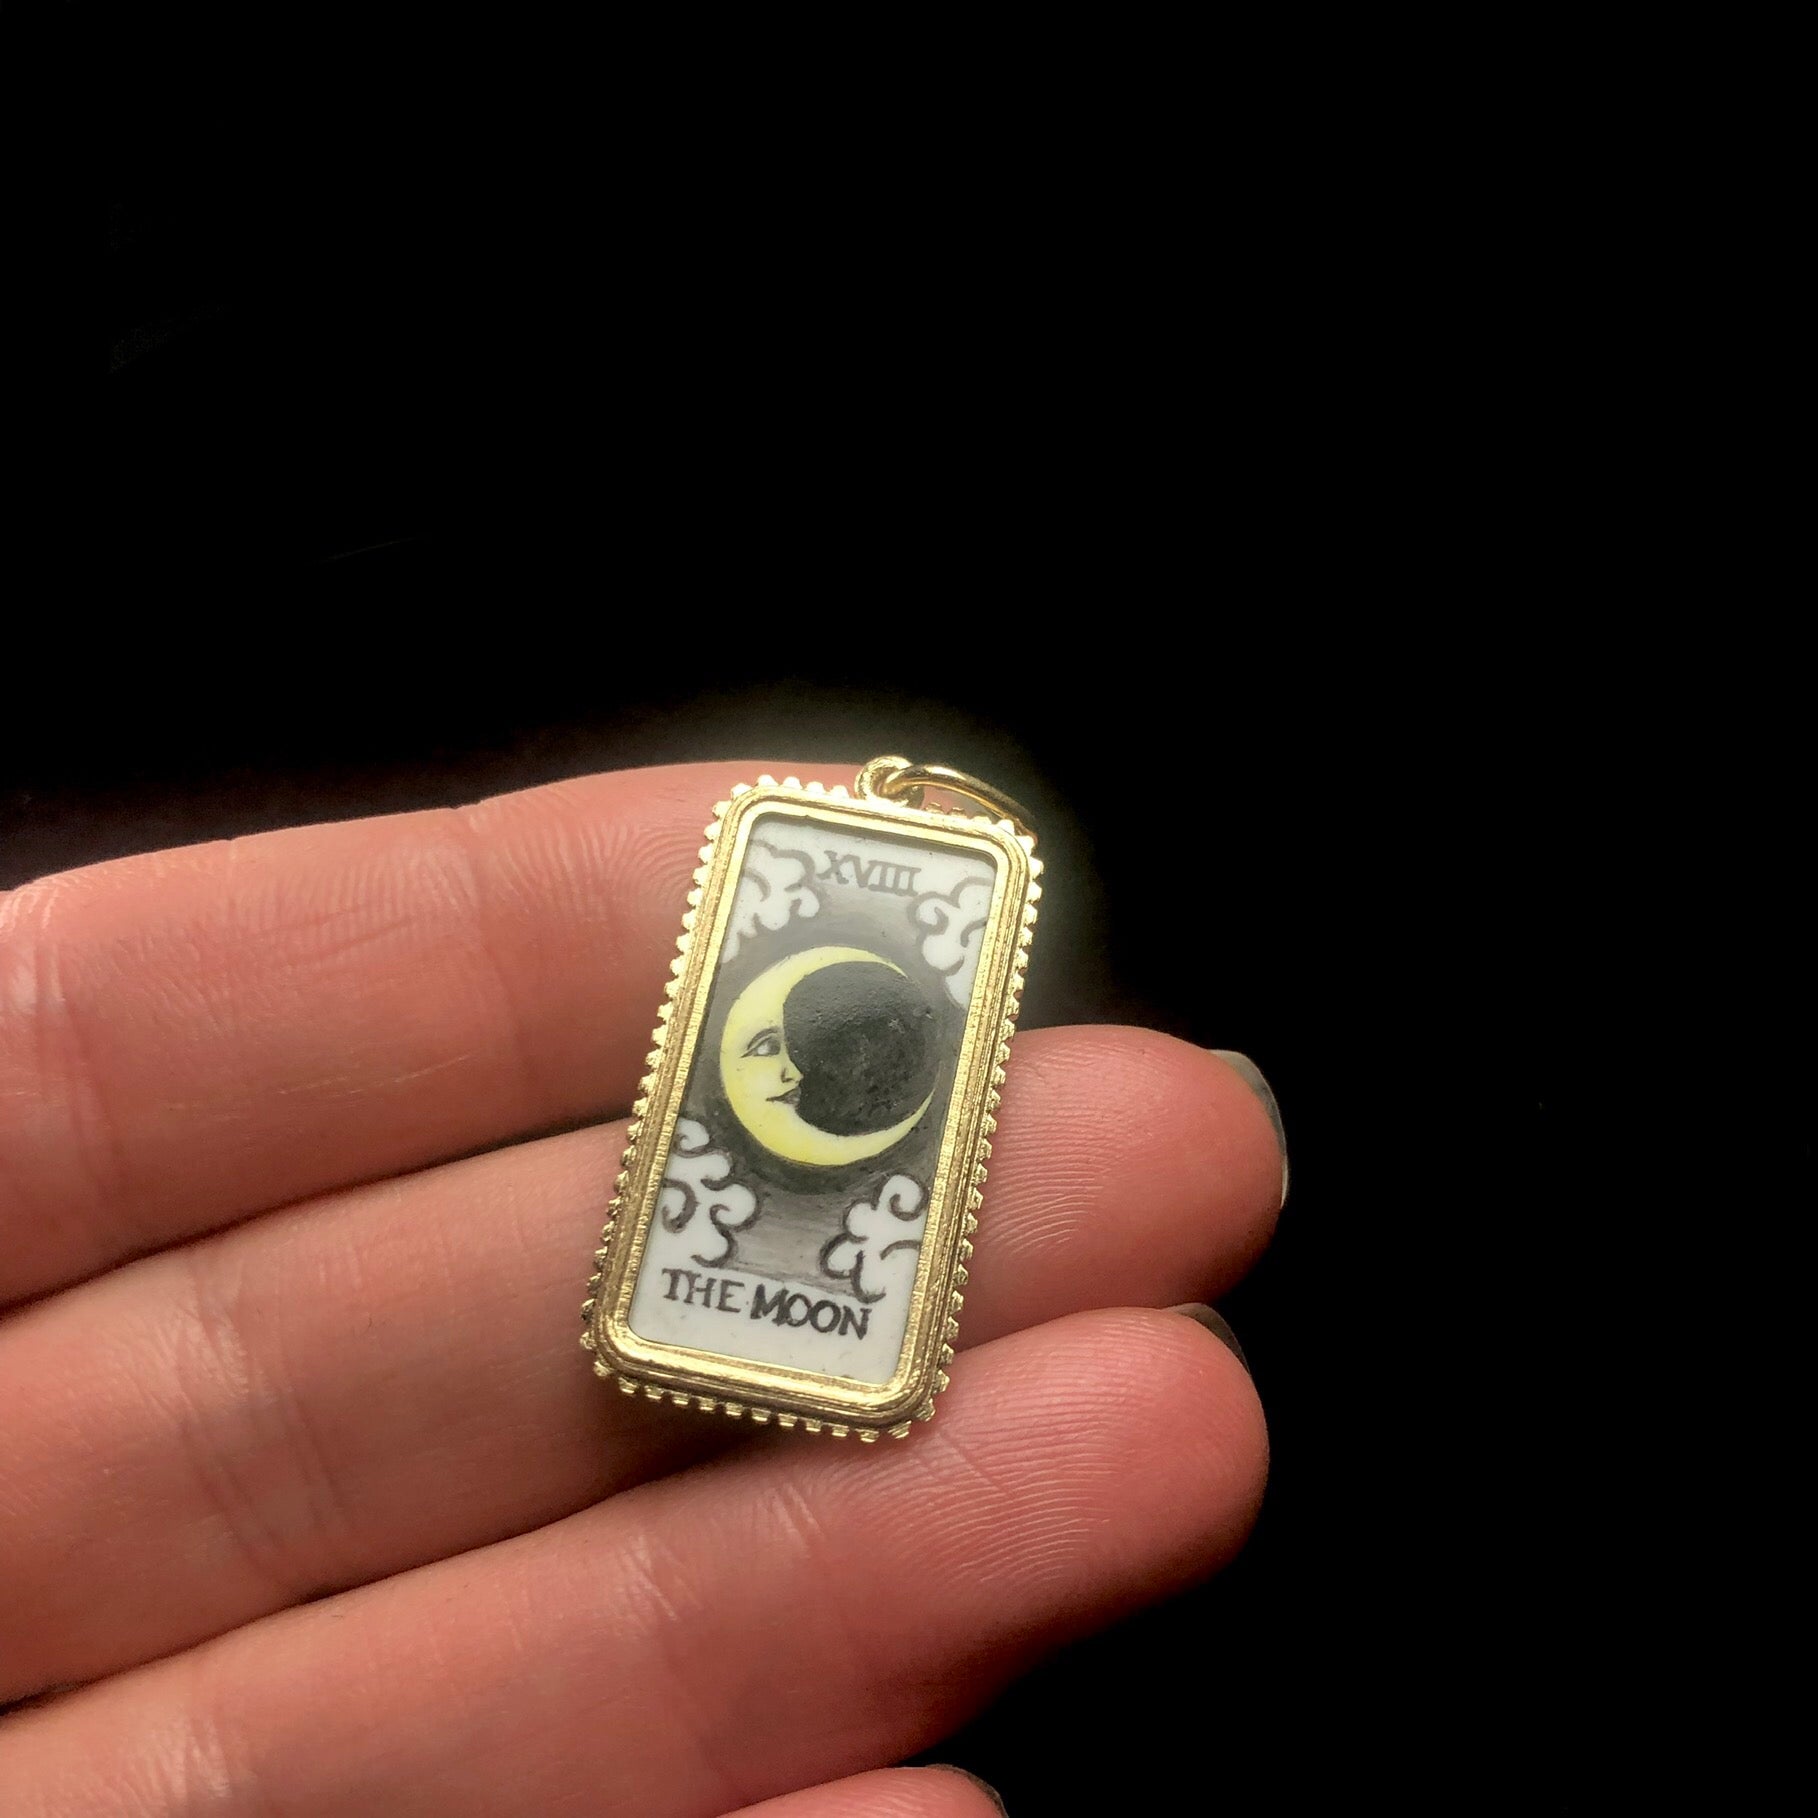 Moon Tarot Card Charm shown in hand